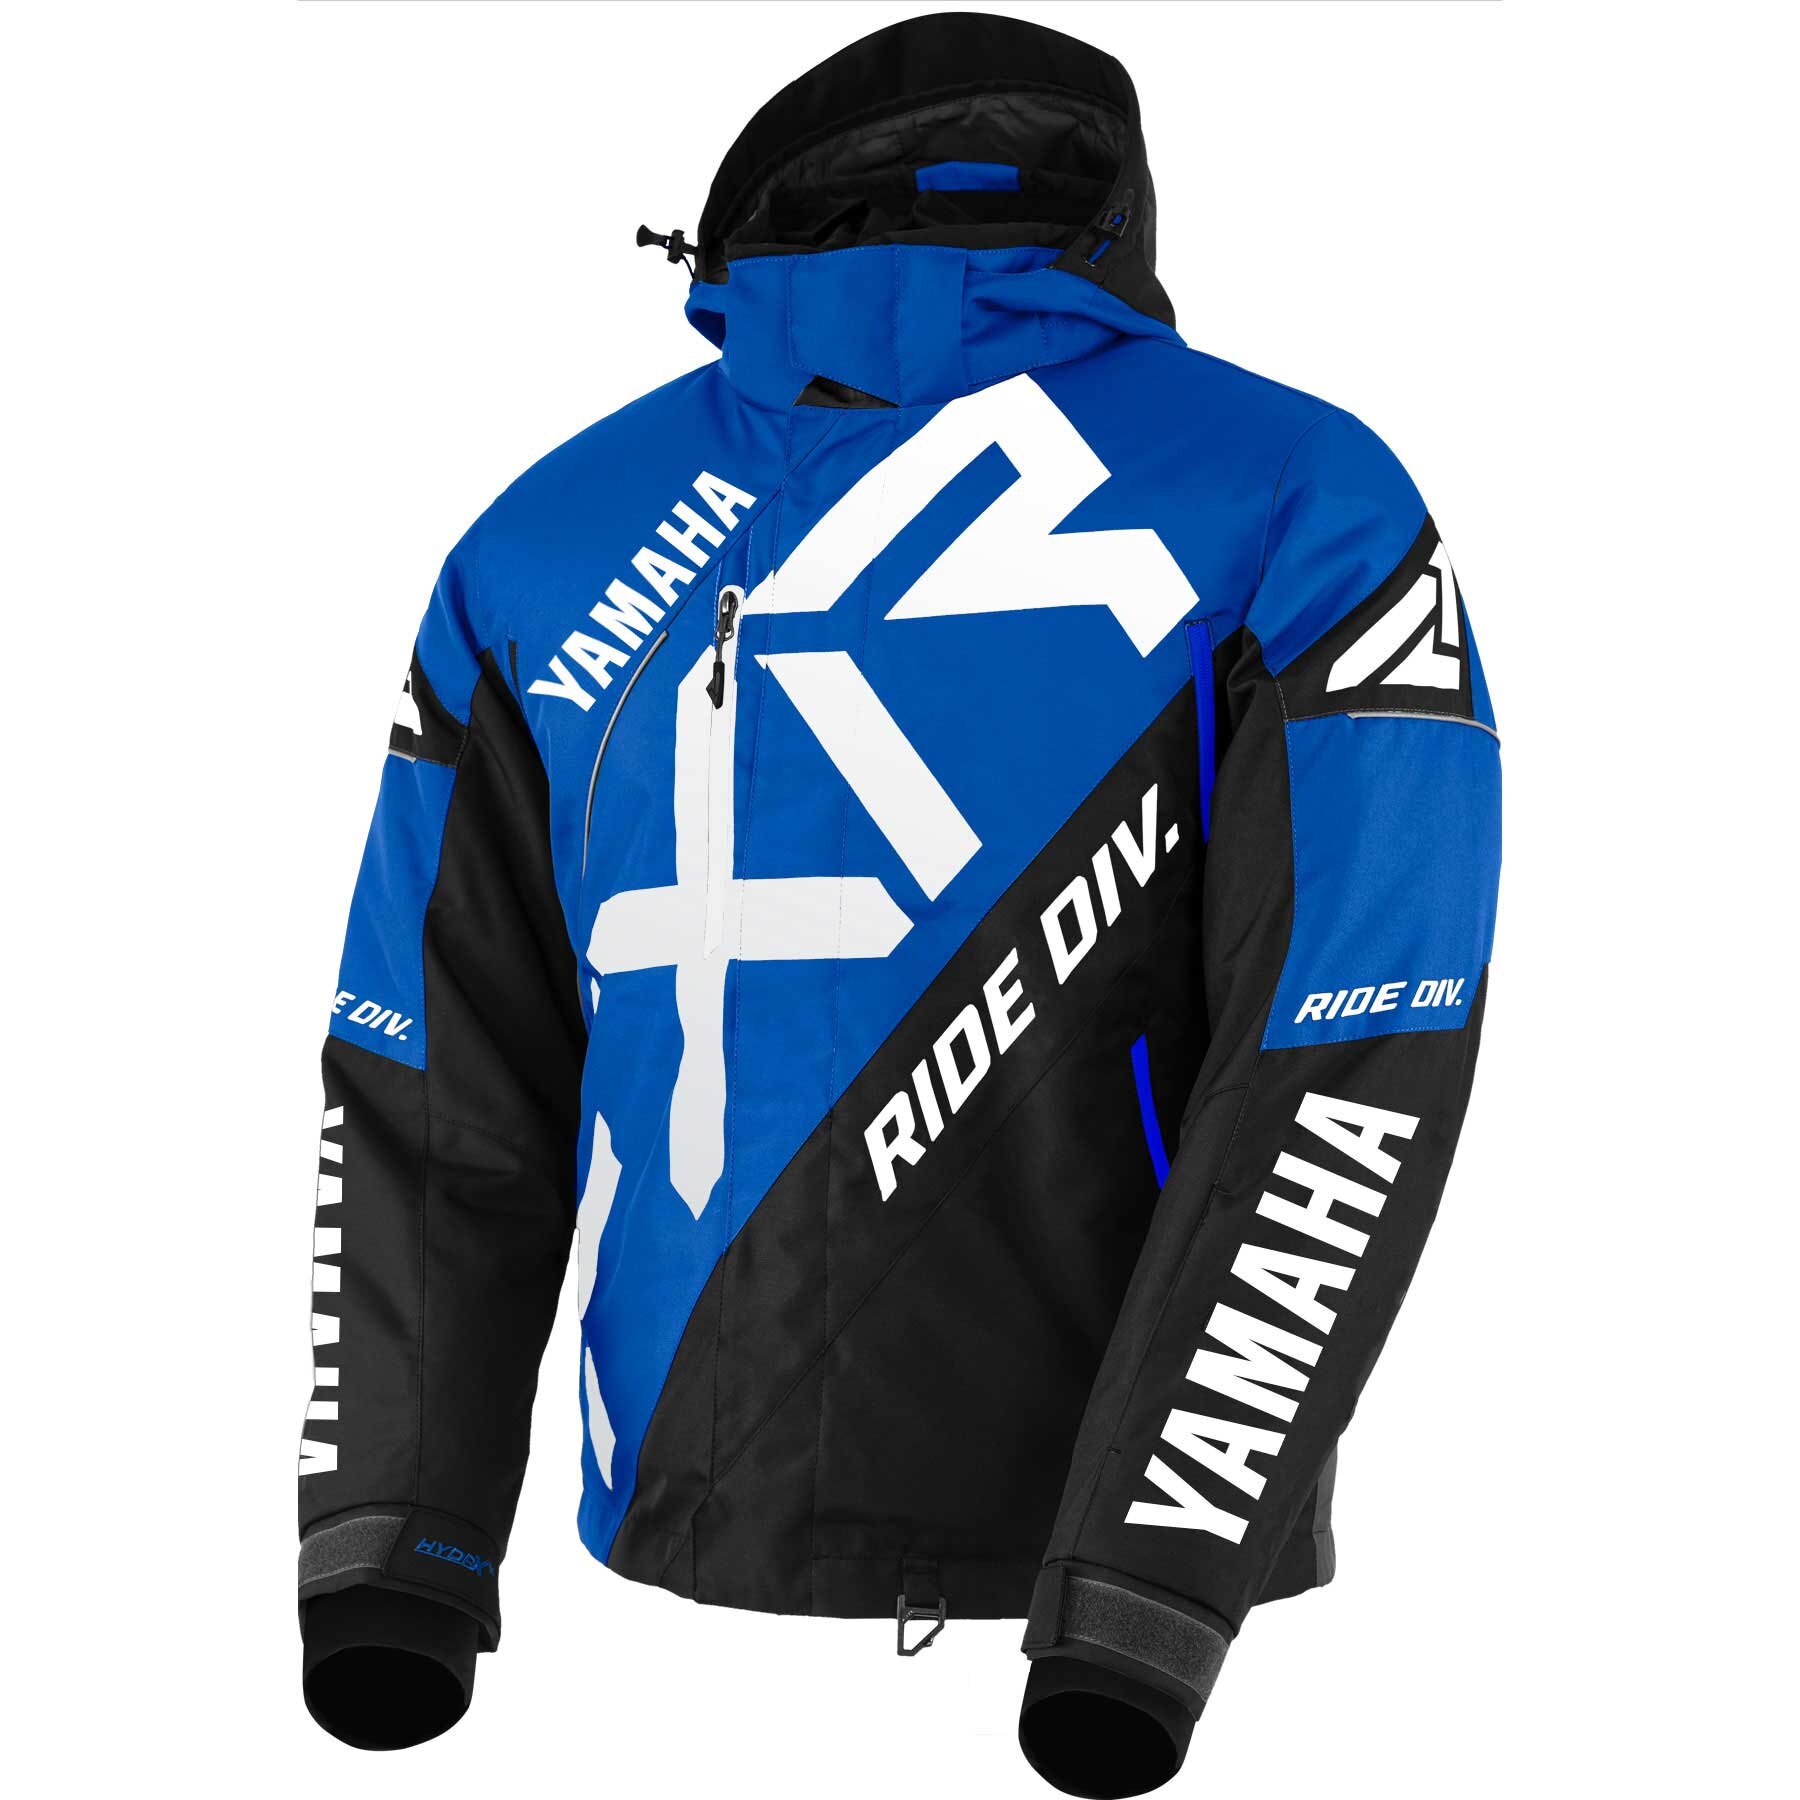 Yamaha CX Jacket by FXR® Small blue/black